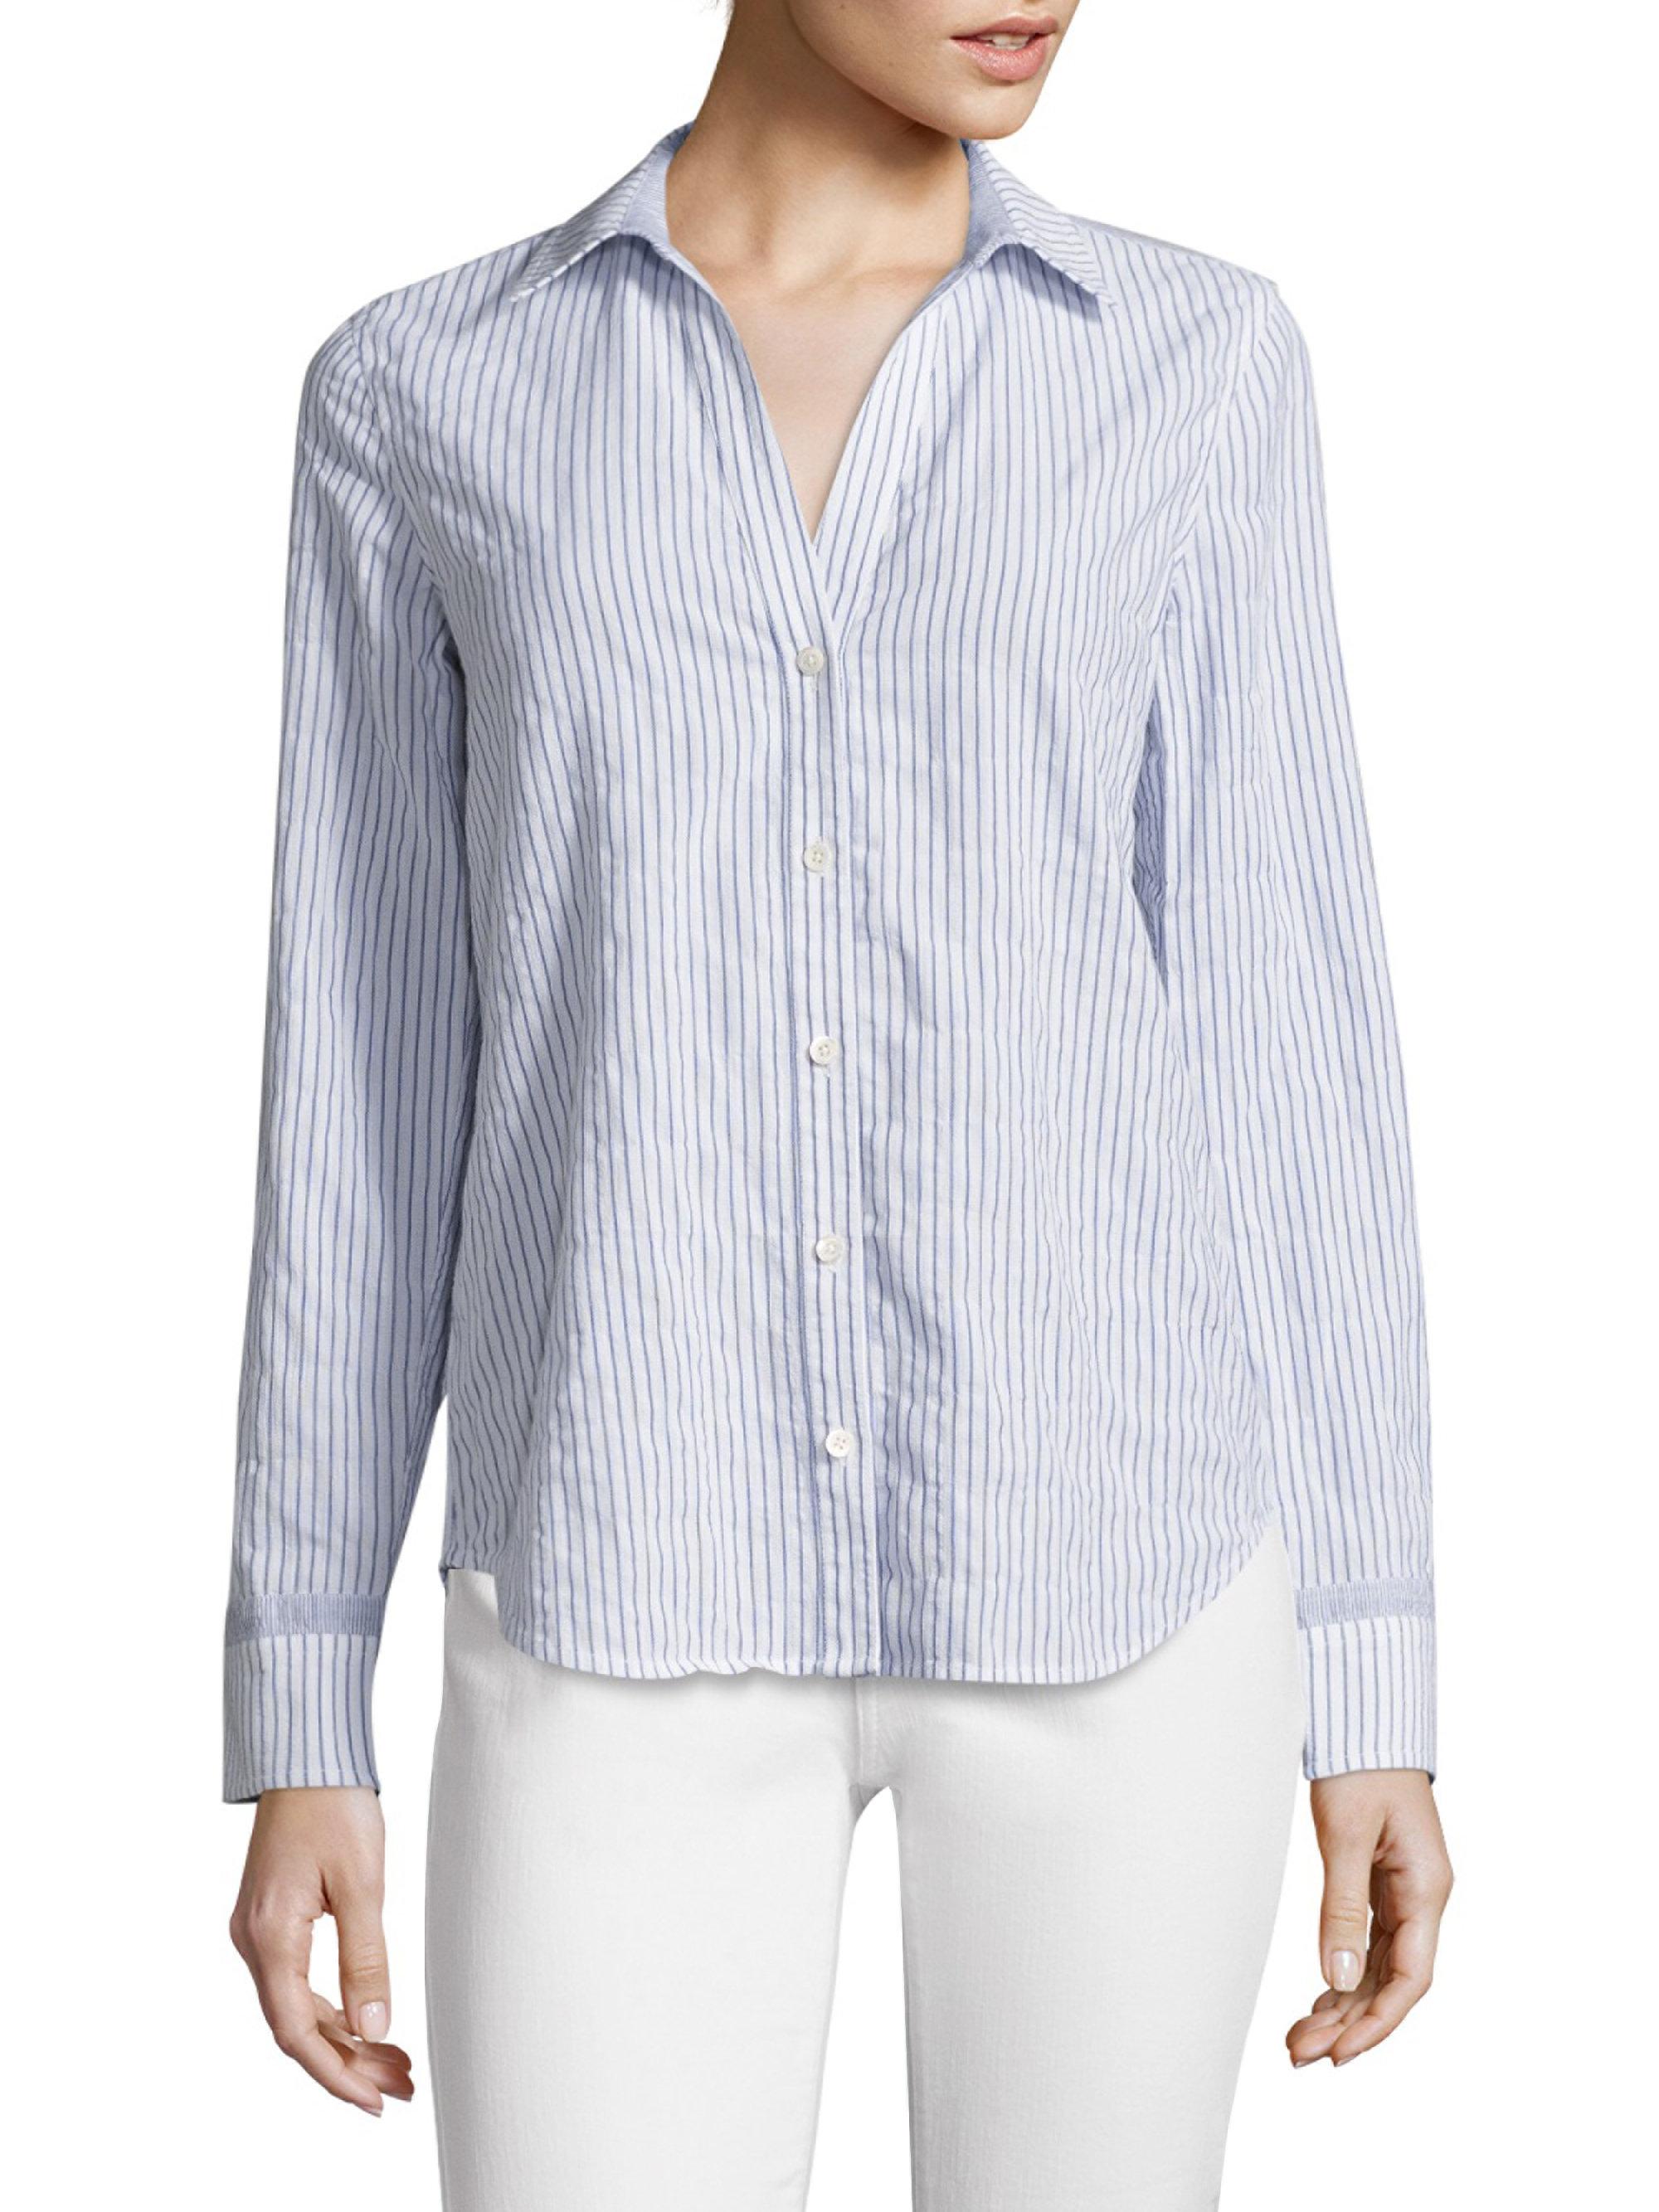 Vineyard Vines Striped Linen & Cotton Shirt in Blue - Lyst